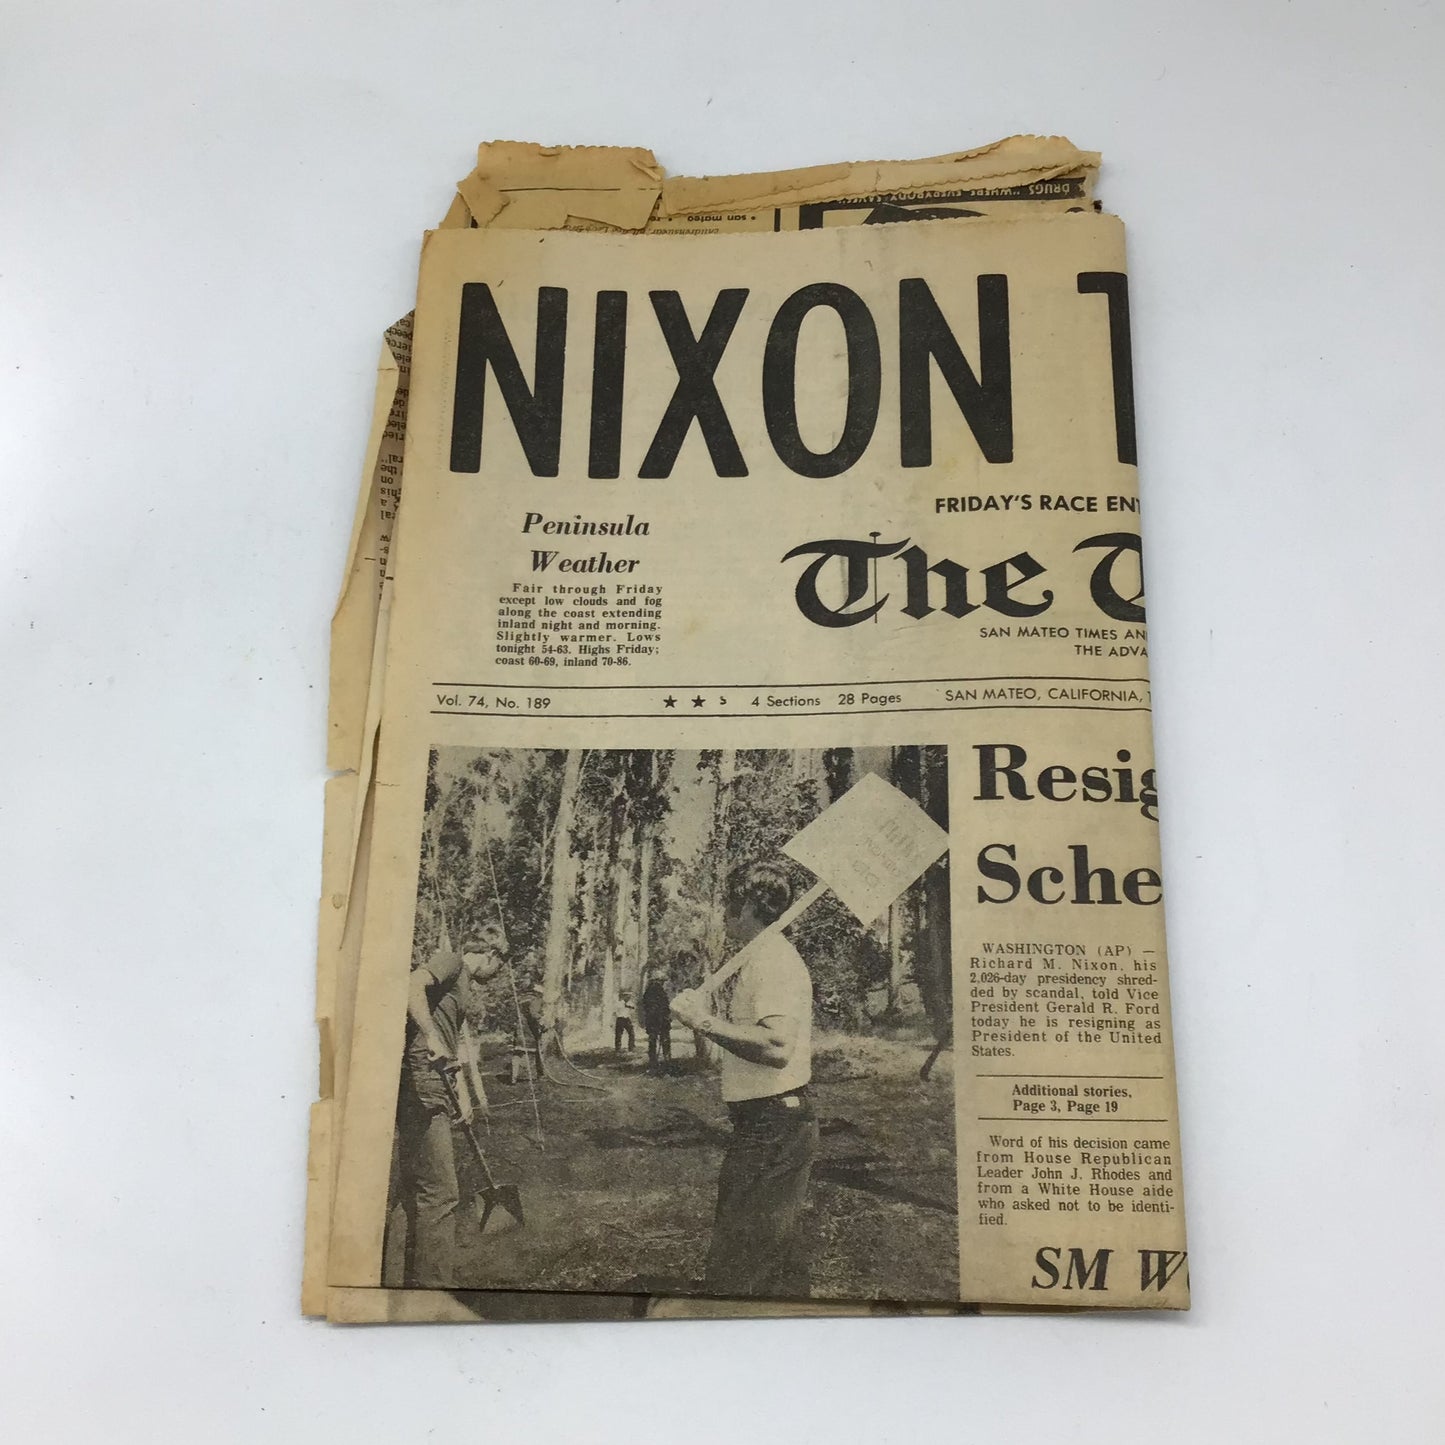 "Nixon to Quit" 1974 Newspaper